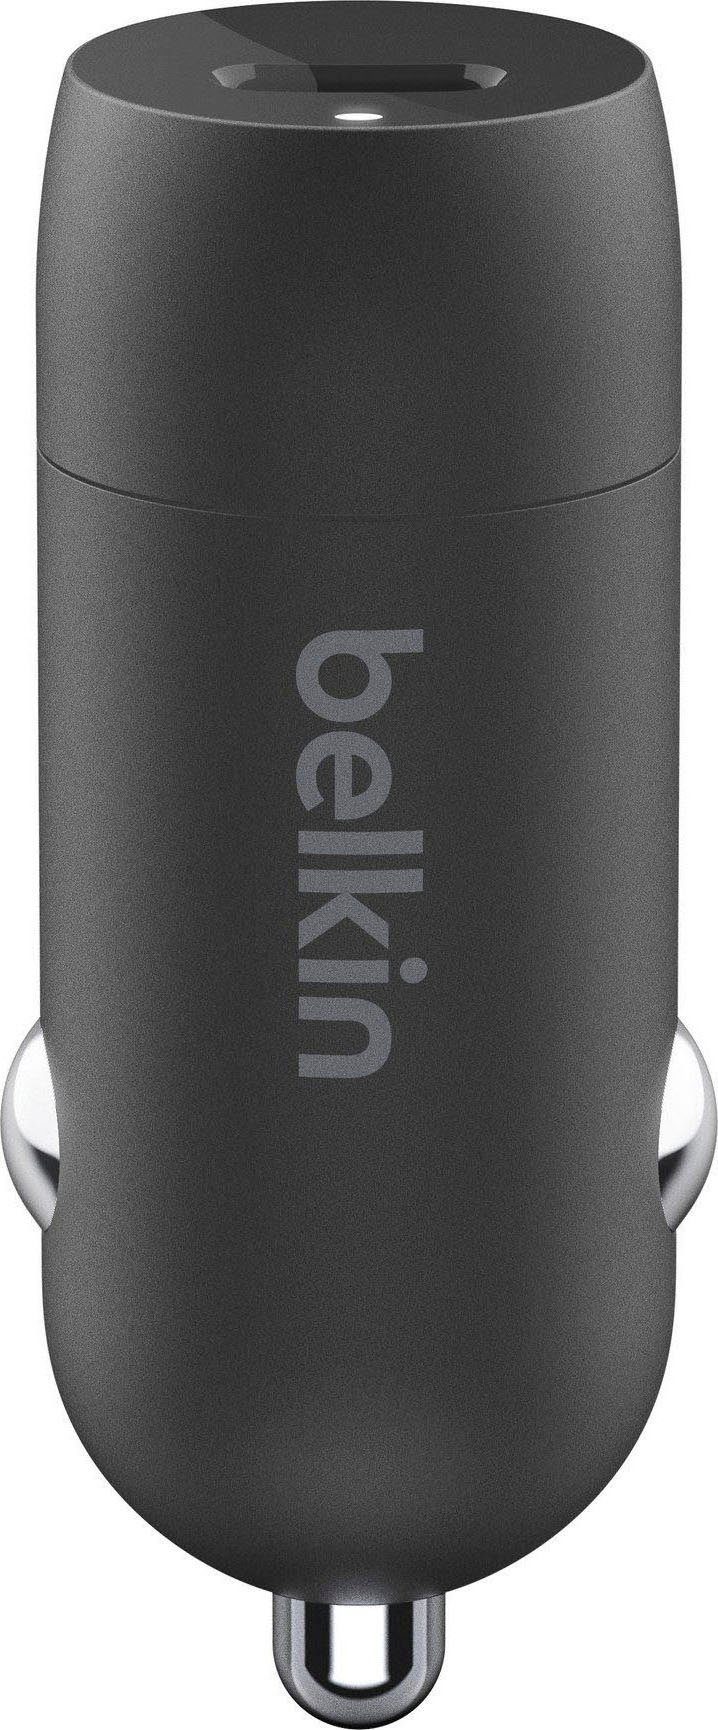 USB-C Autobatterie-Ladegerät Power Delivery 20W Belkin Kfz-Ladegerät mit